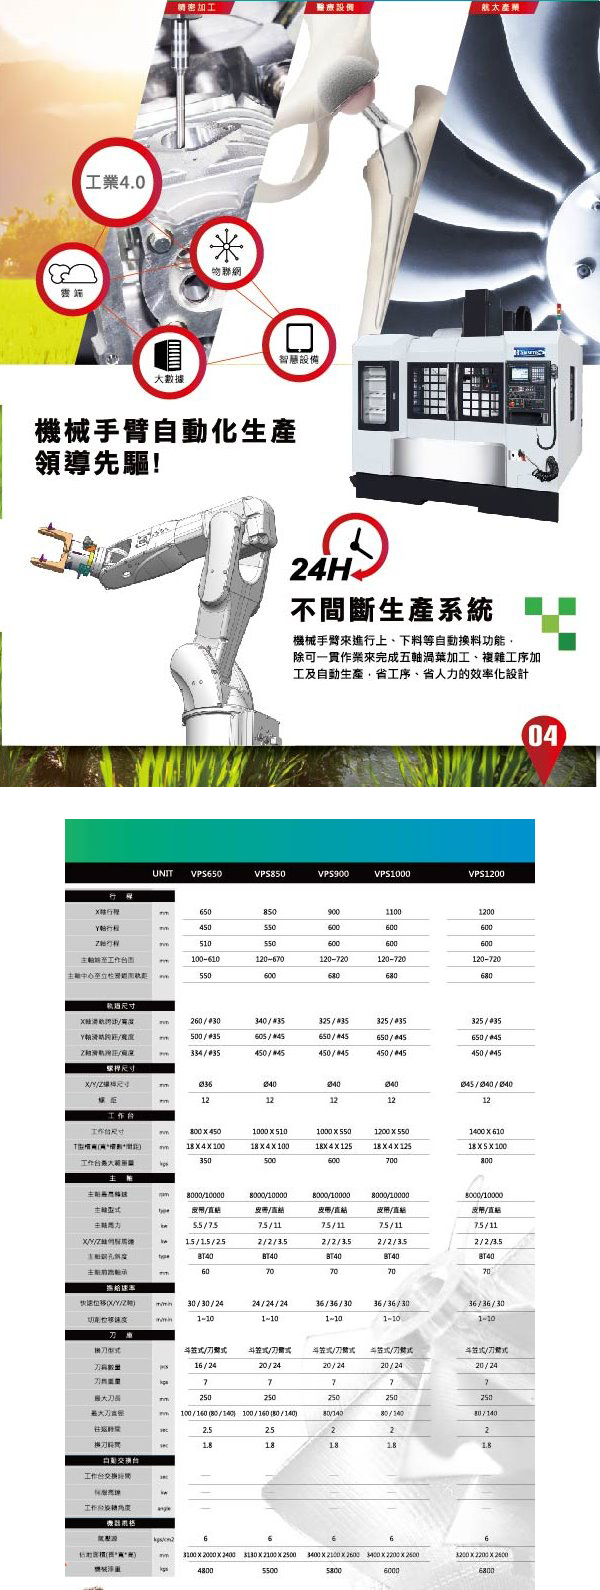 Robotic arm+VPS-650